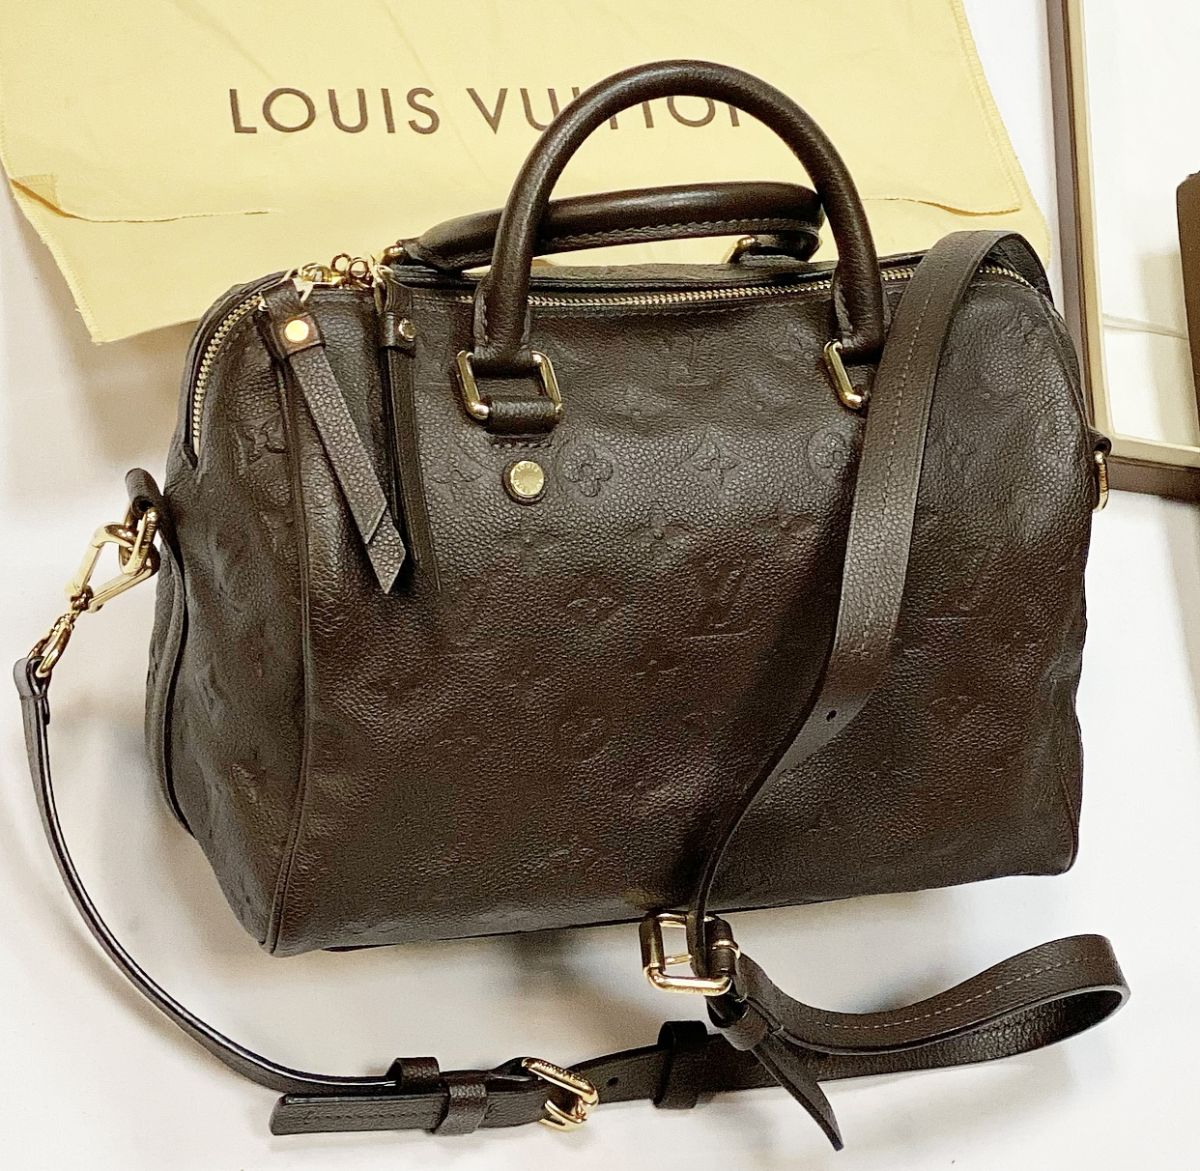 Сумка Louis Vuitton размер 26/17 цена 69 232 руб 